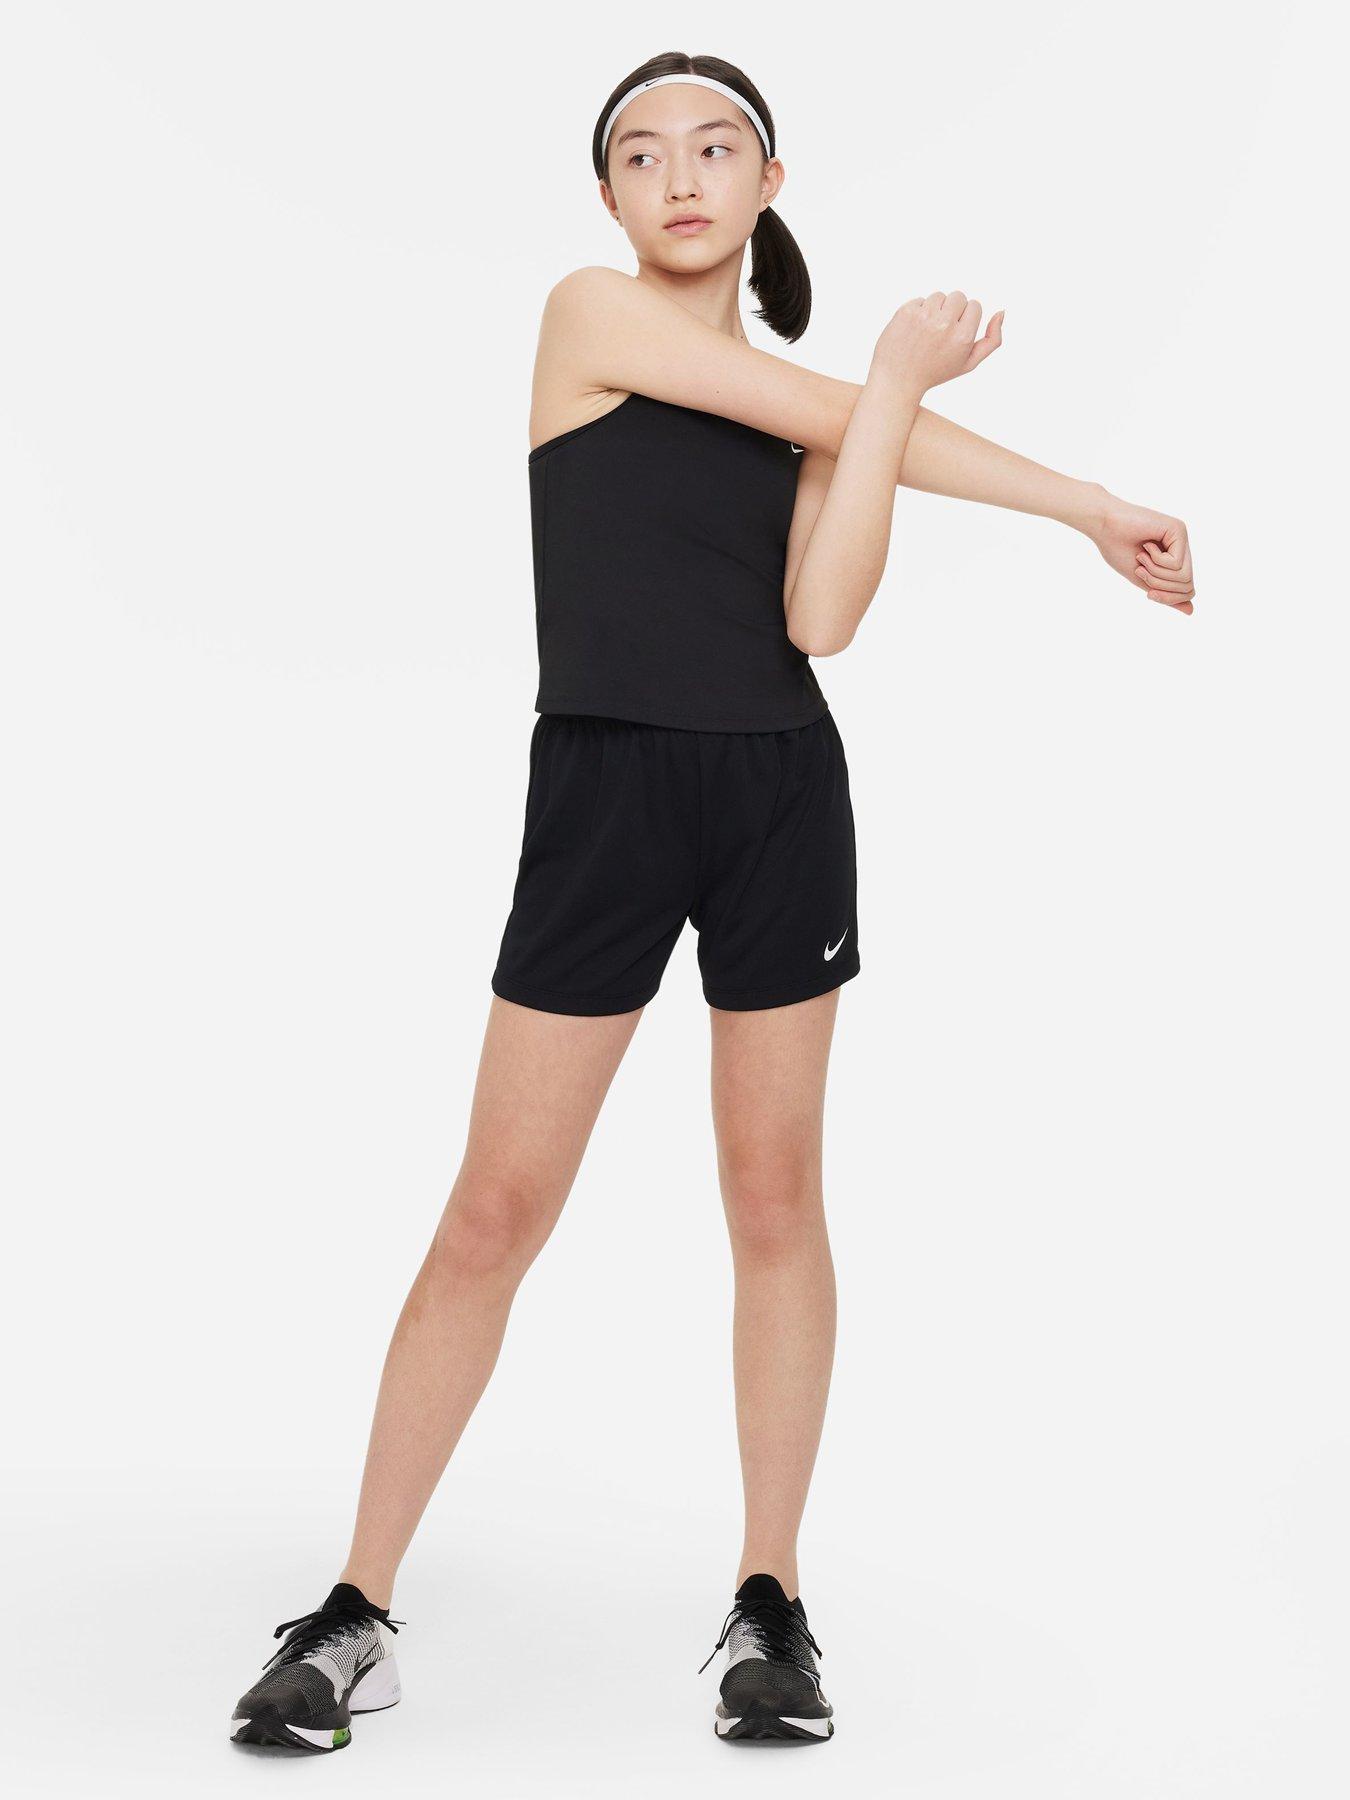 Nike Girls' Dri-FIT Trophy 6 Training Shorts $ 20